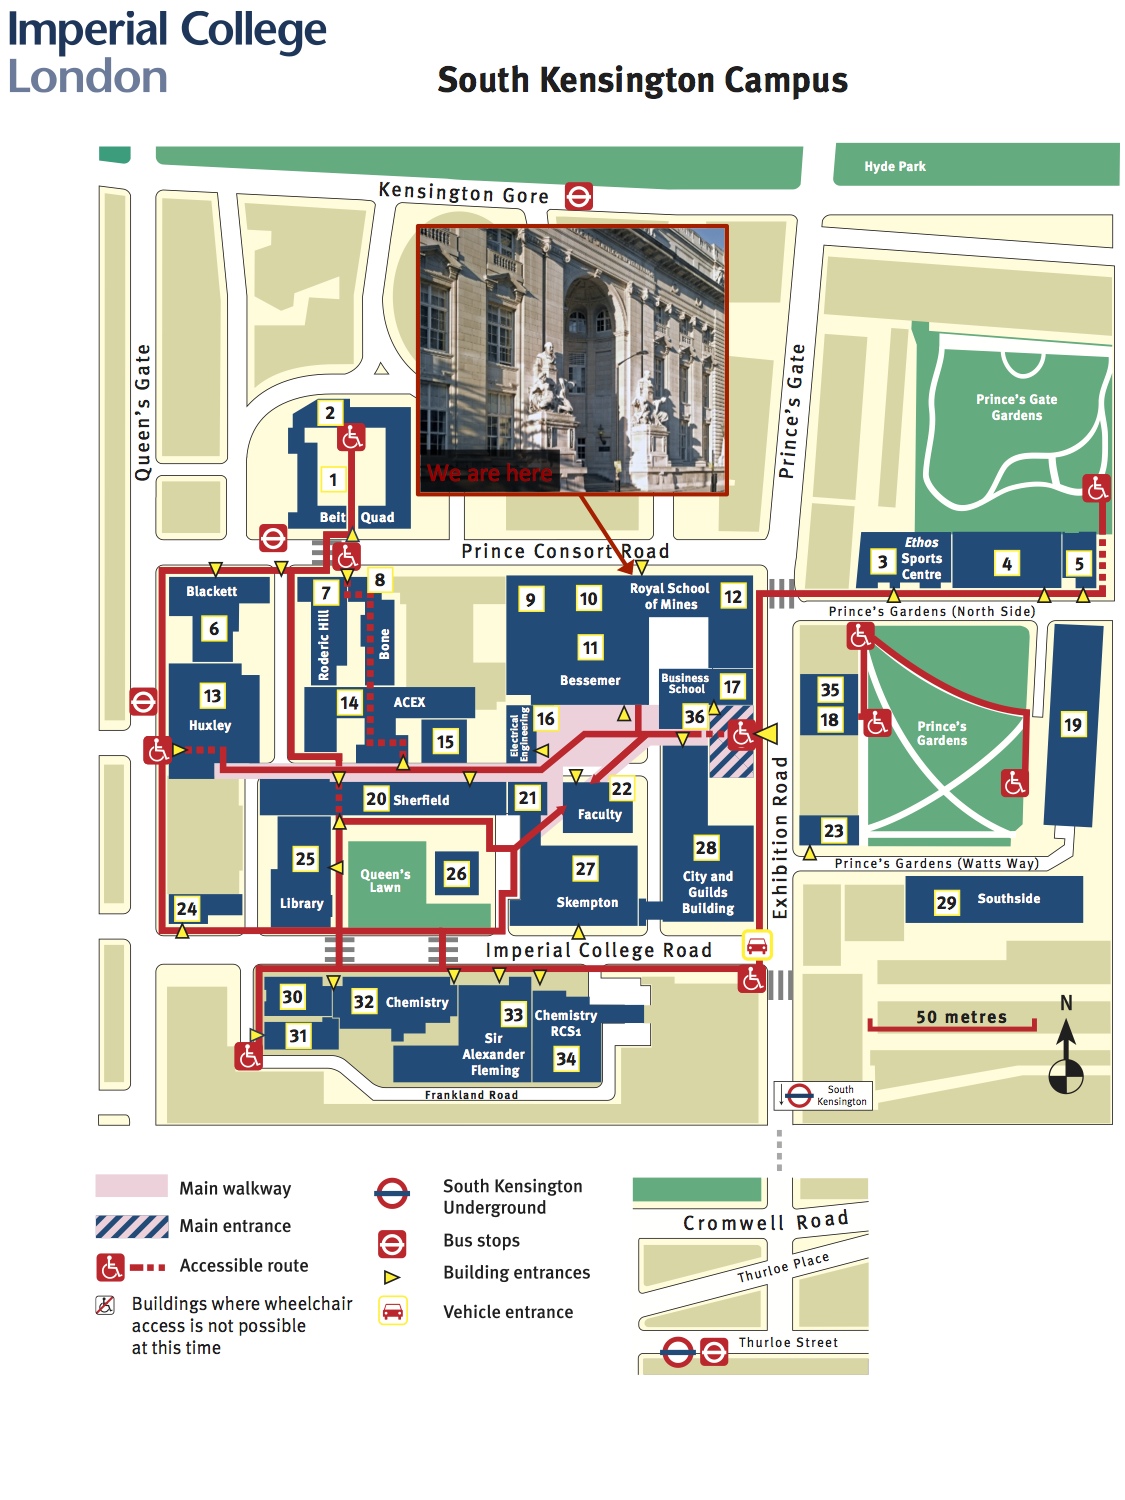 South Kensington Campus map